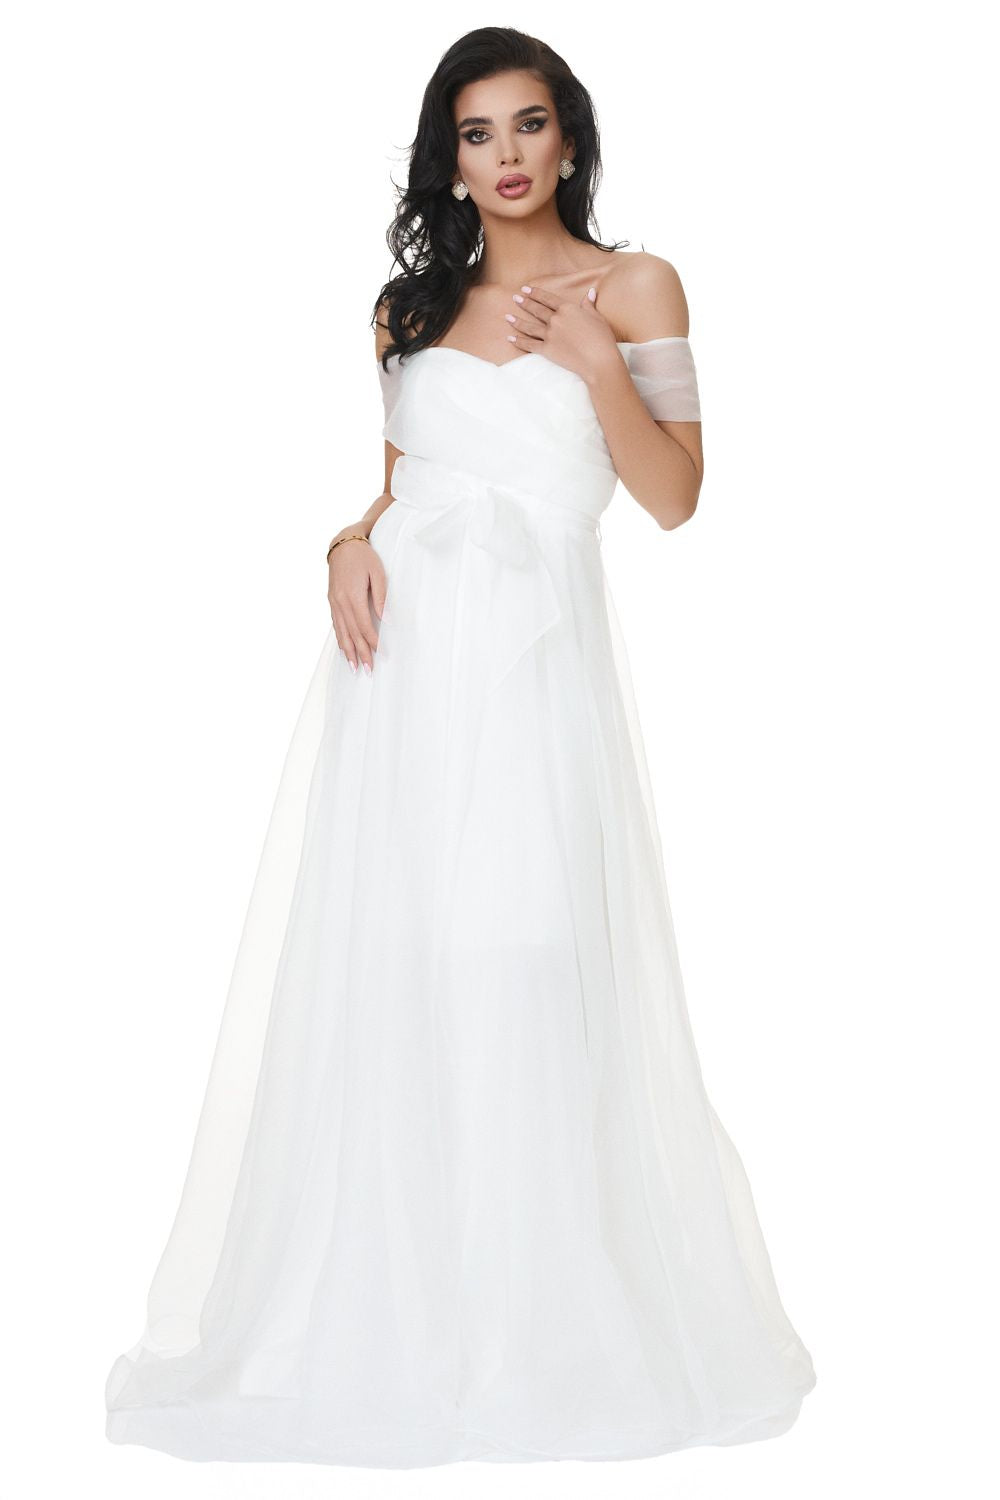 Ponamisona Bogas long white dress for ladies